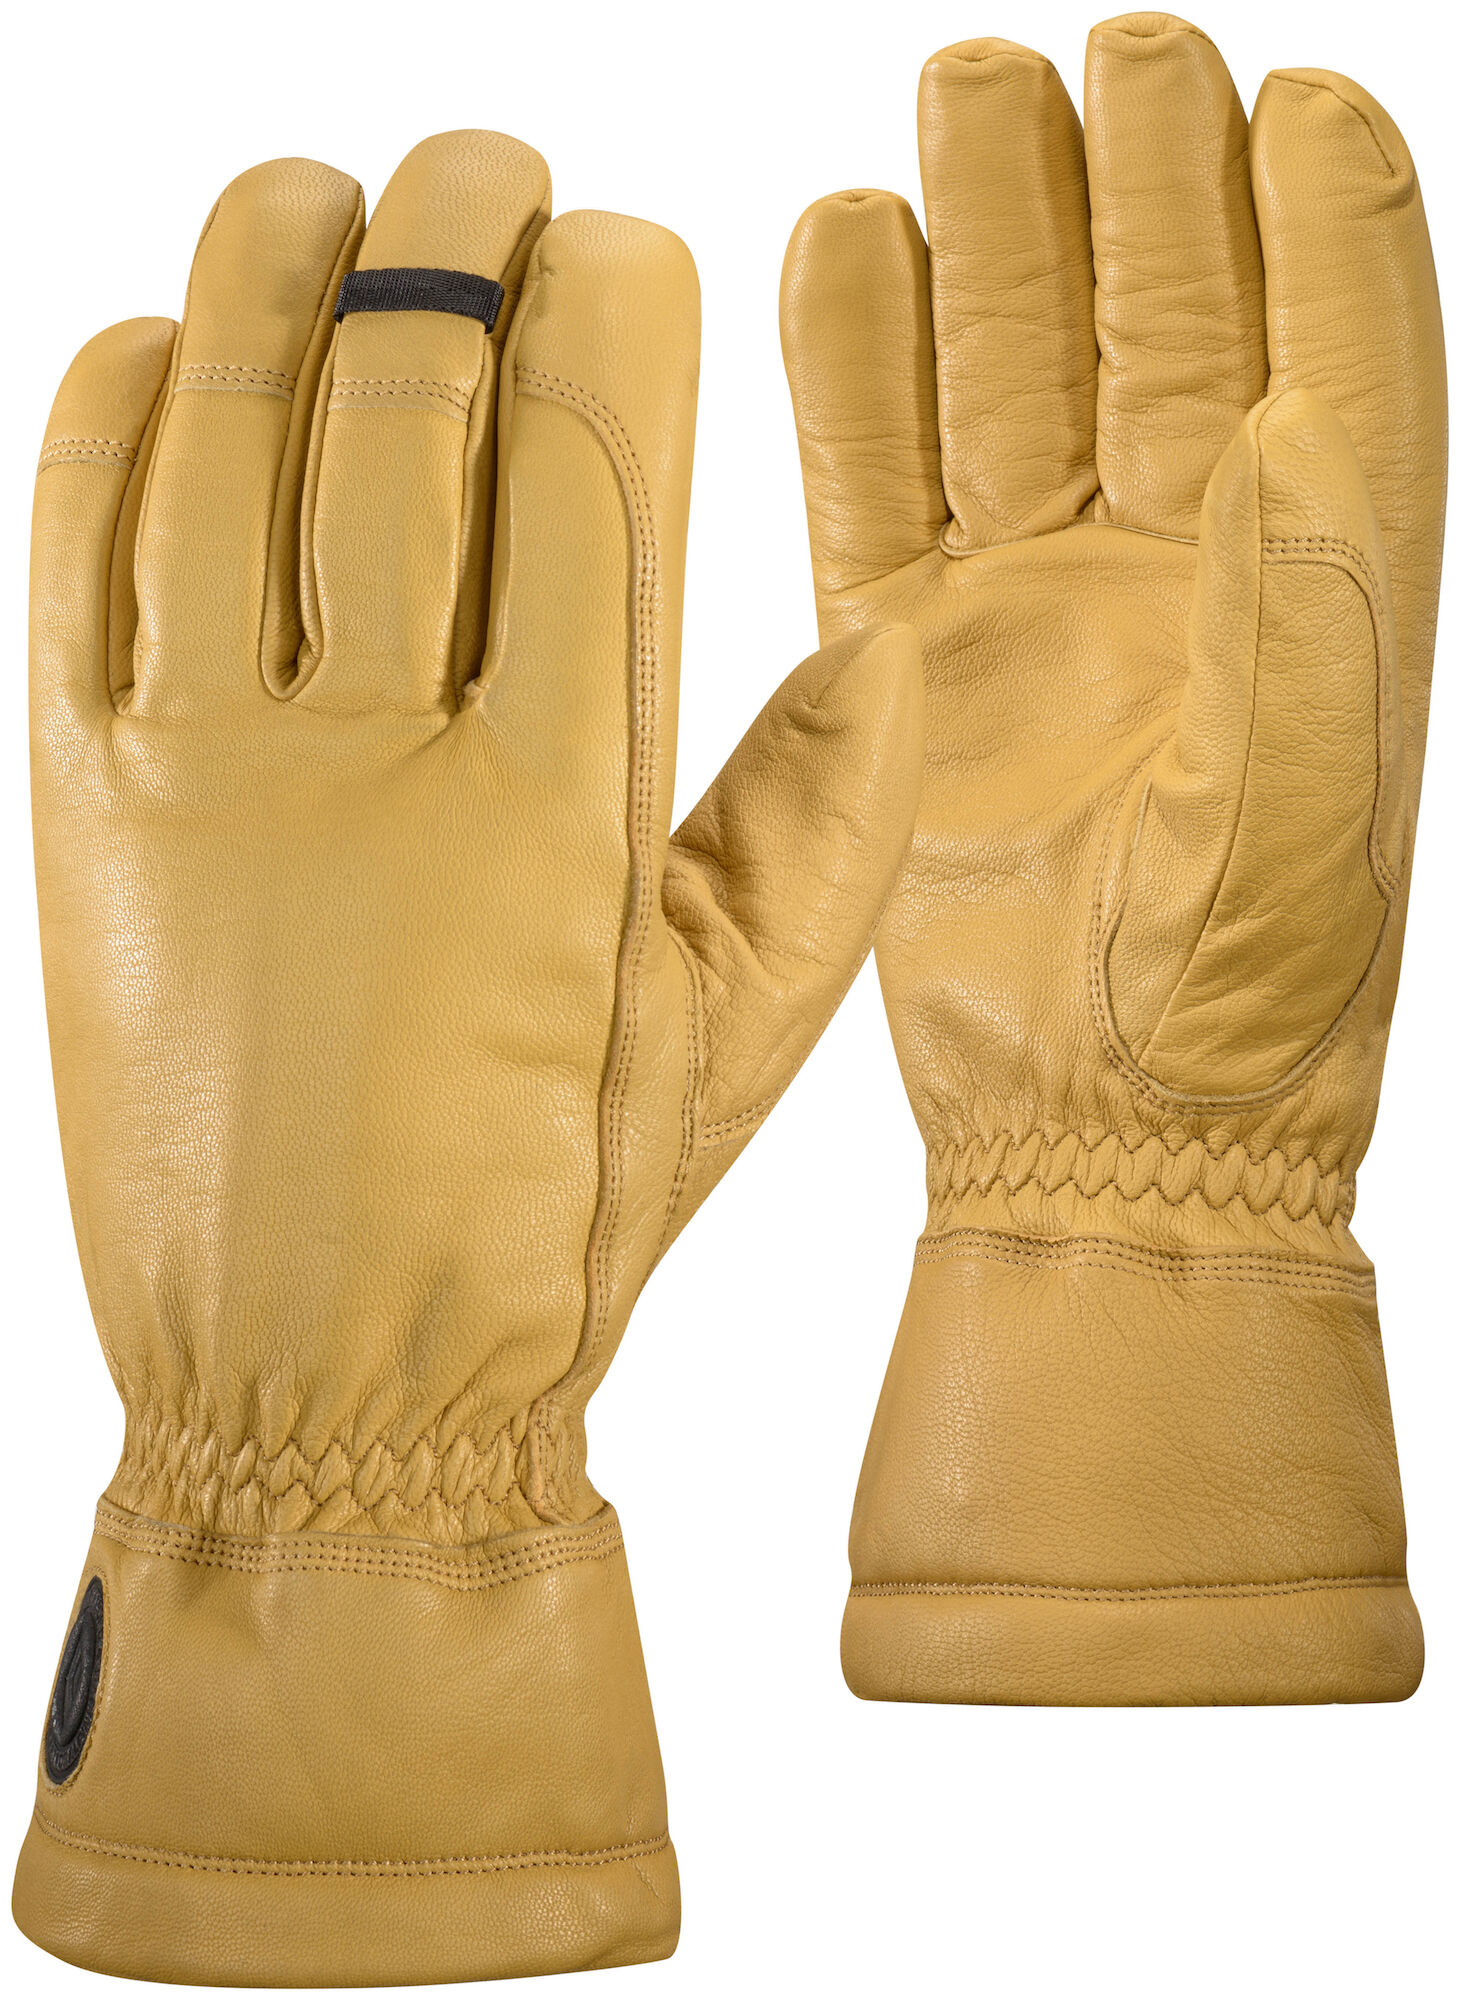 Black Diamond - Work Gloves - Gloves